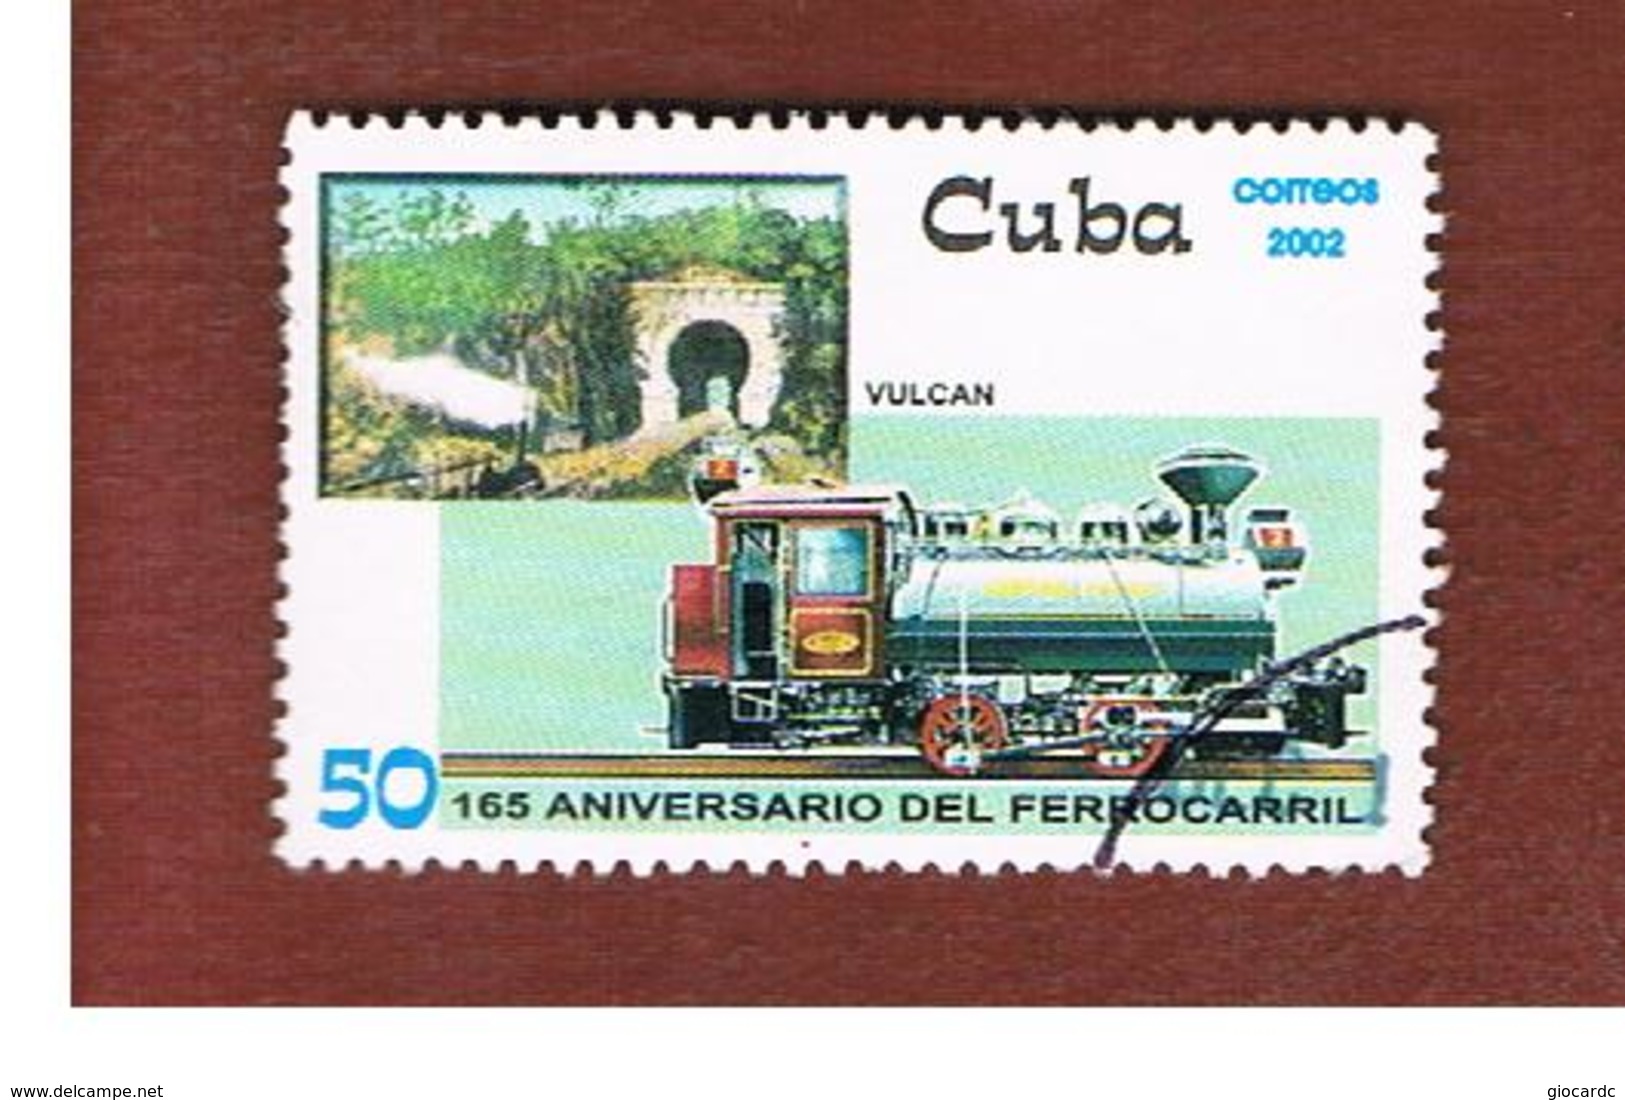 CUBA -  MI  4475 -  2002   LOCOMOTIVES: VULCAN    - USED - Usados